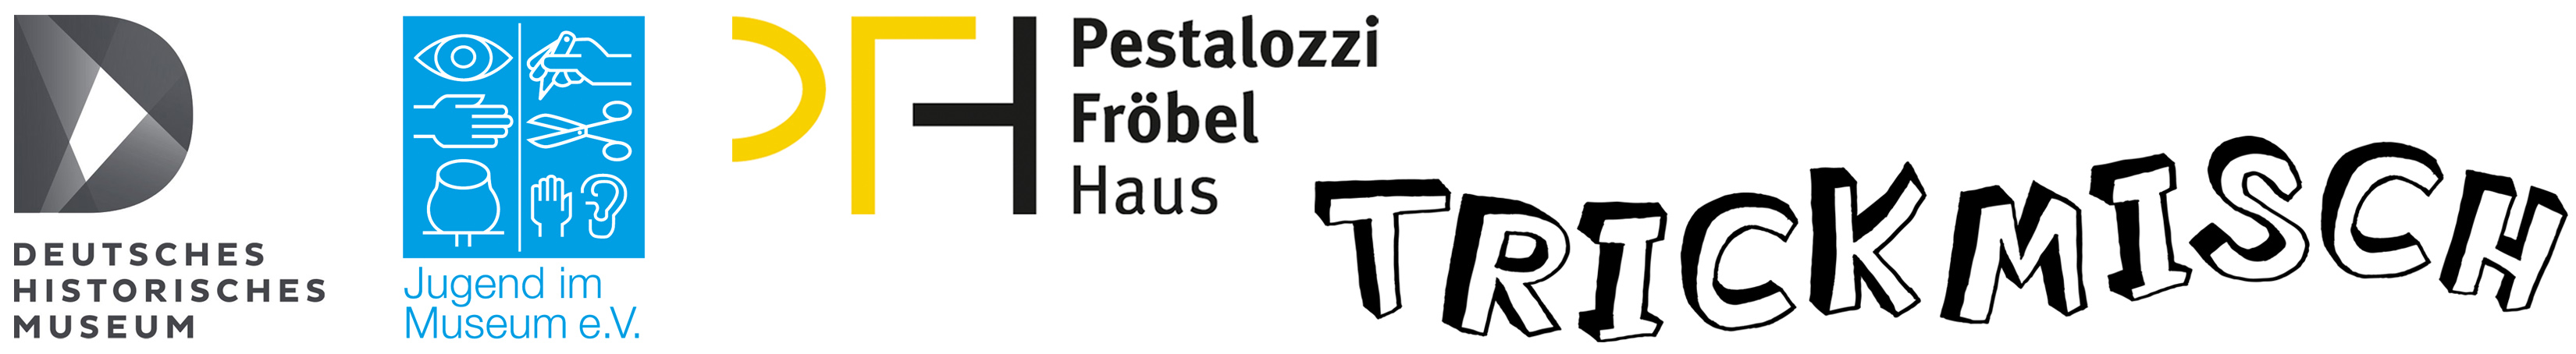 Logoleiste Zeitreisen